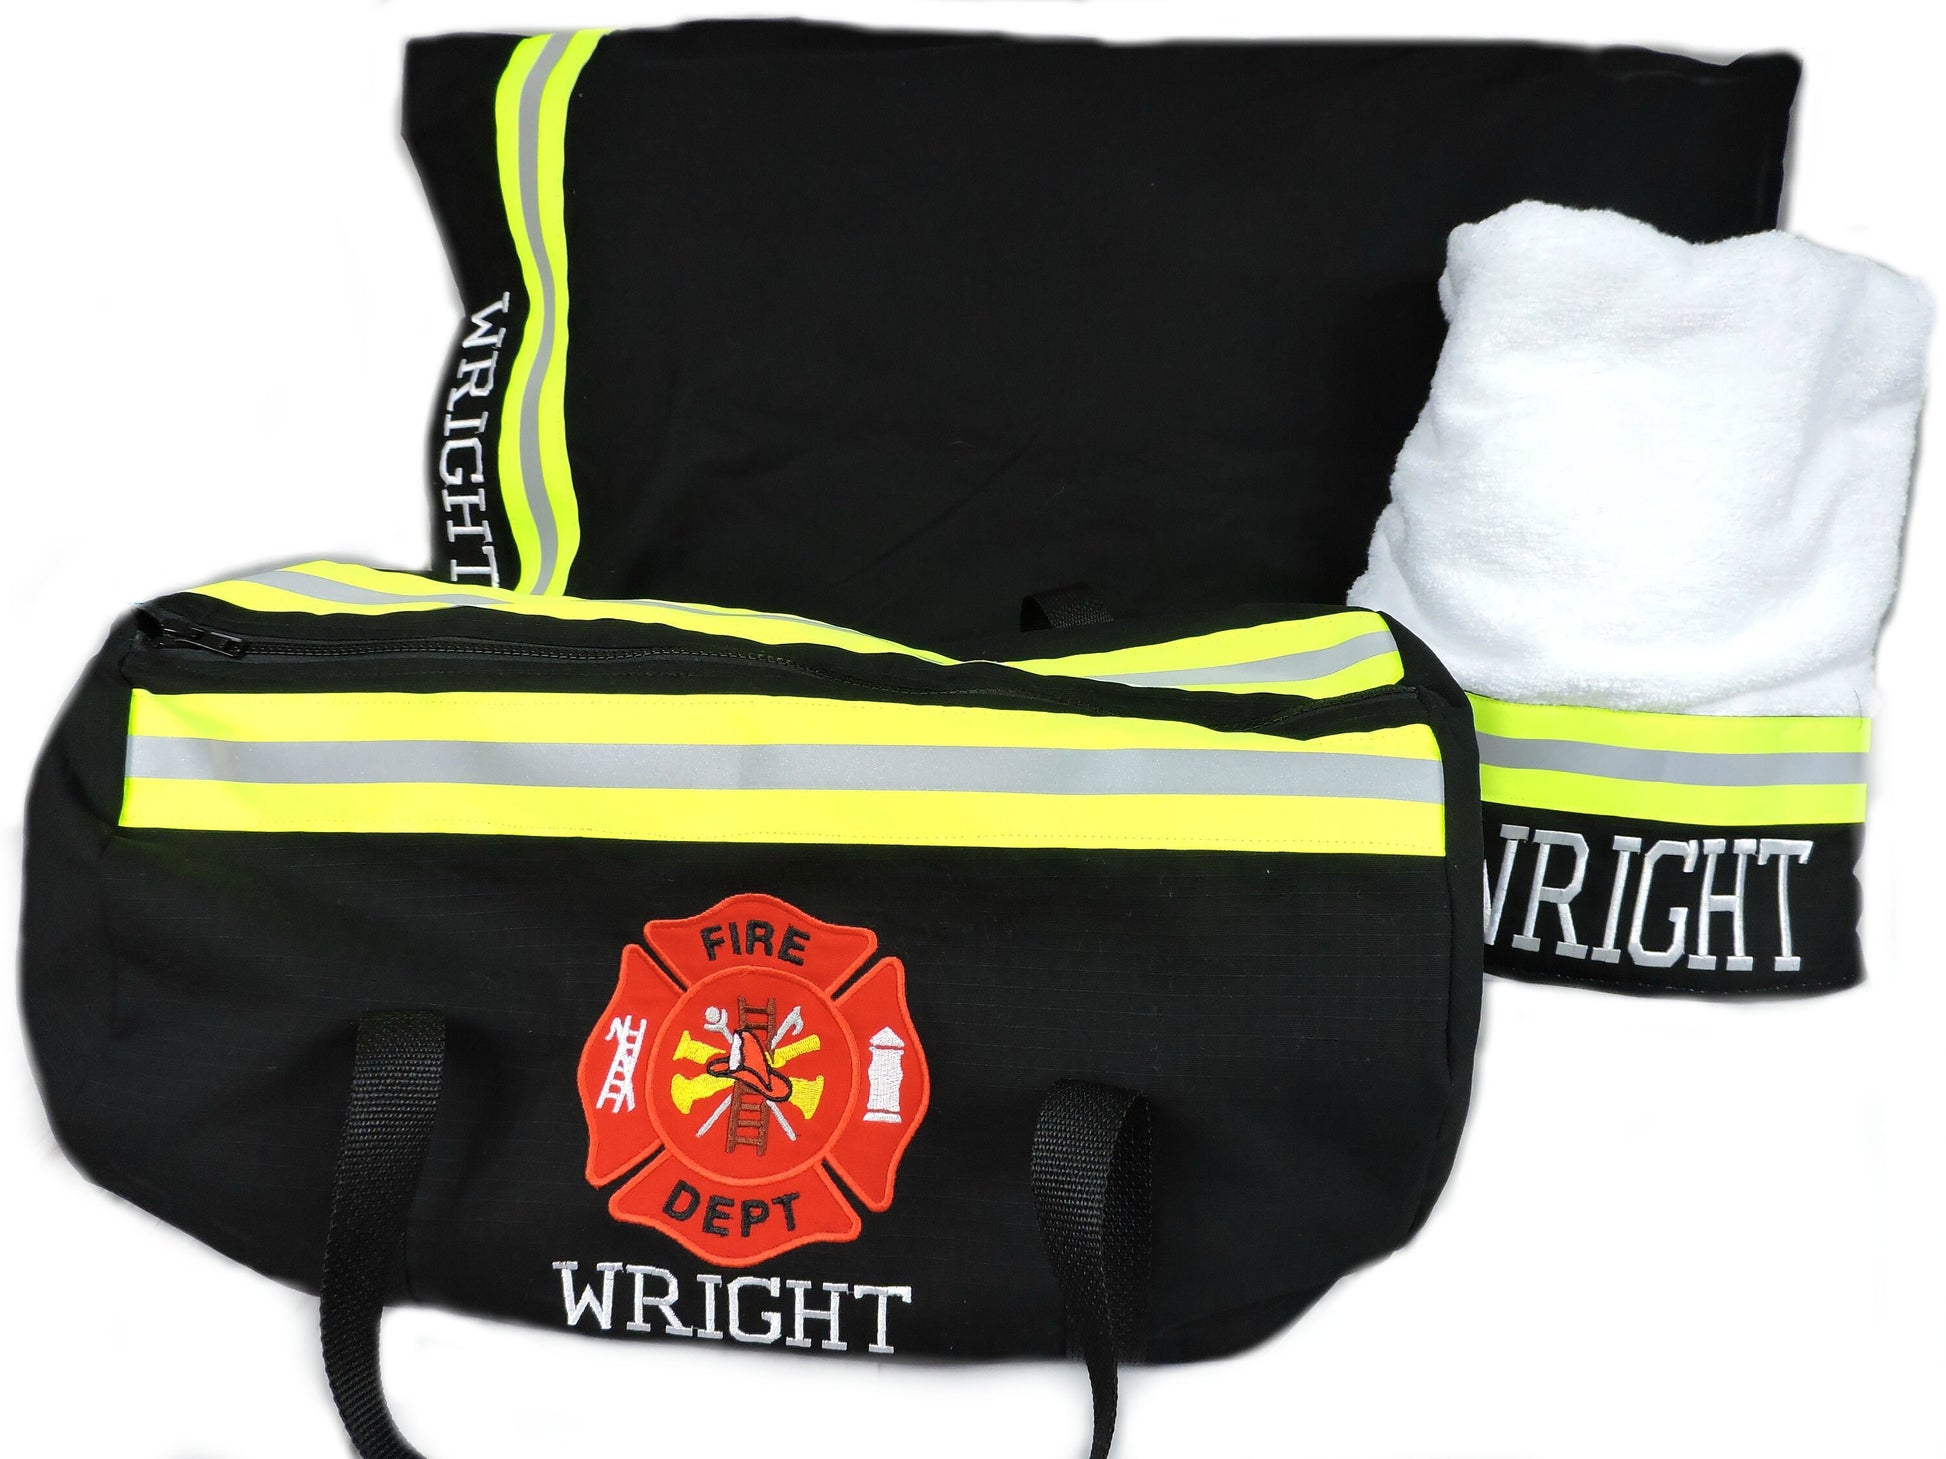 black fabric Firefighter Duffel bag, pillowcase and bath towel gift set